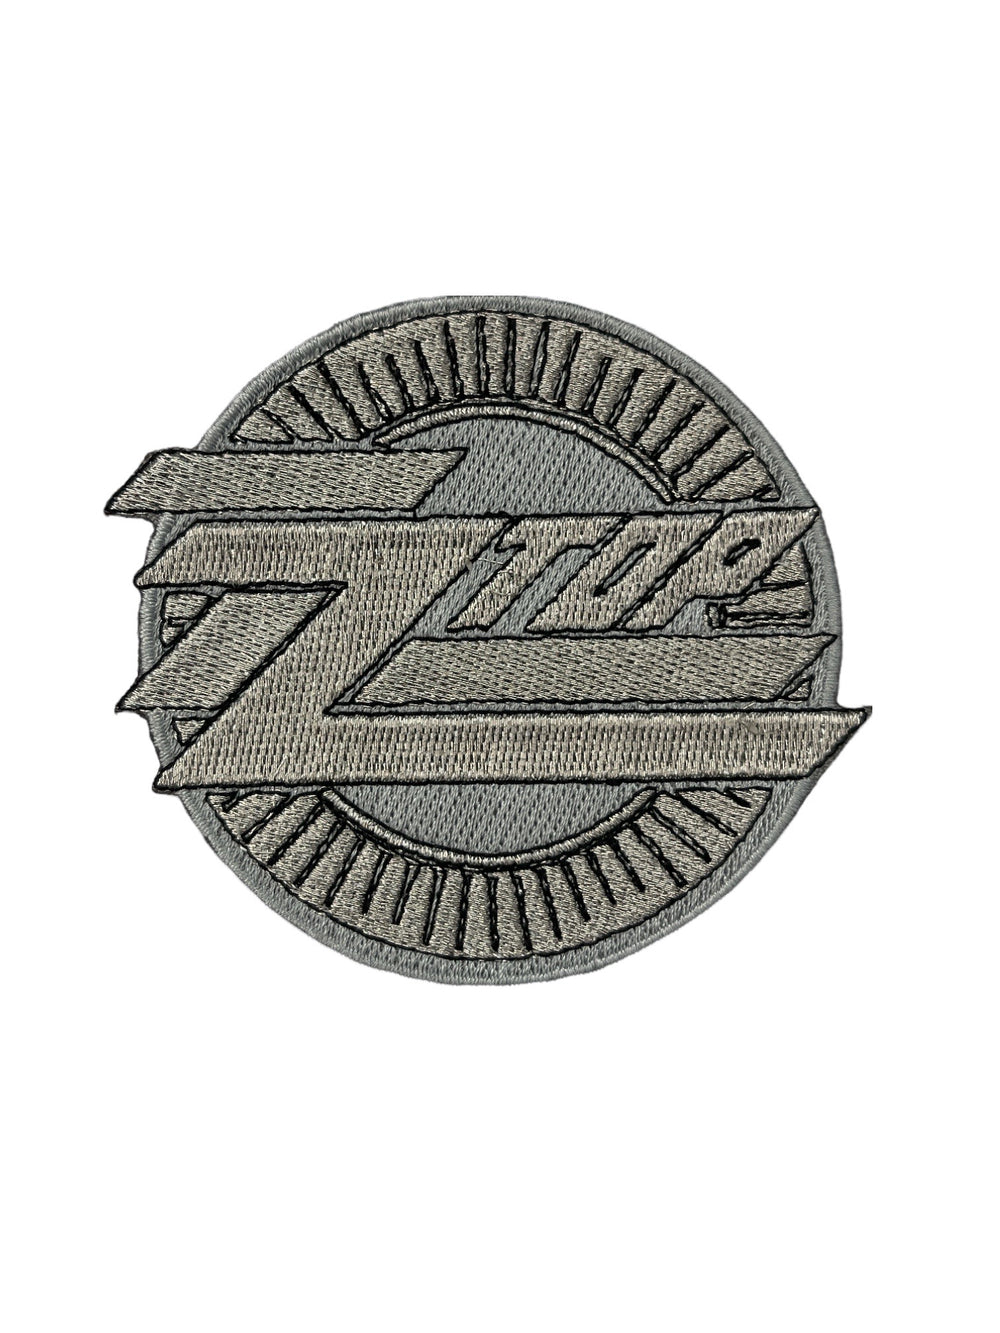 ZZ Top Standard Patch: Metallic Logo Official Woven Patch Brand New